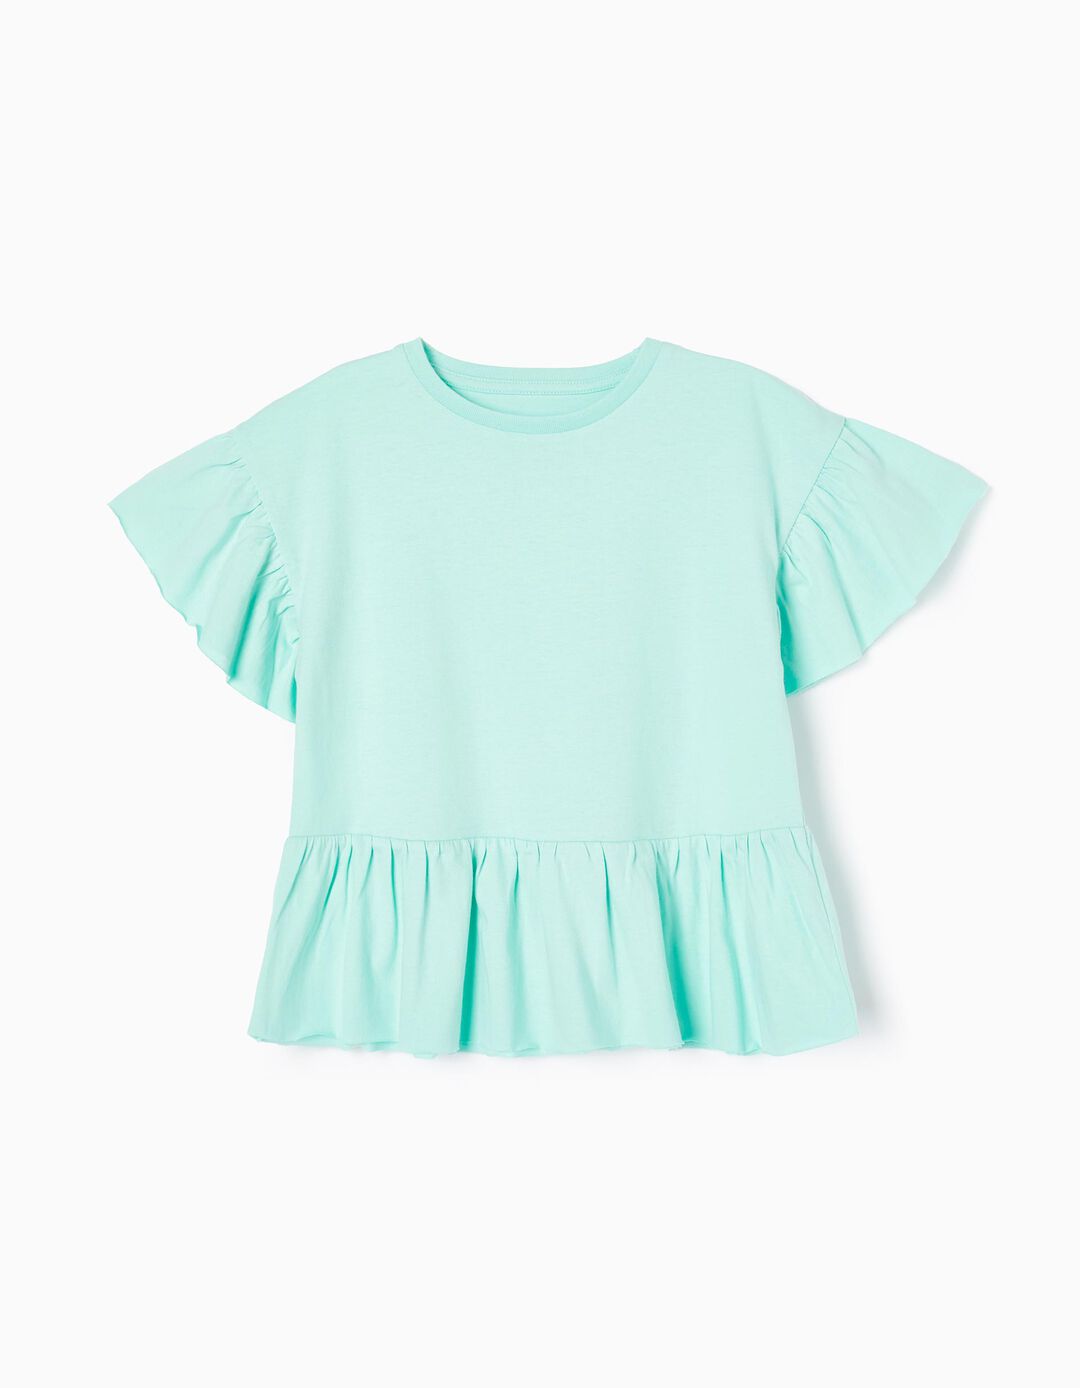 Cotton T-shirt with Frills for Girls, Aqua Green